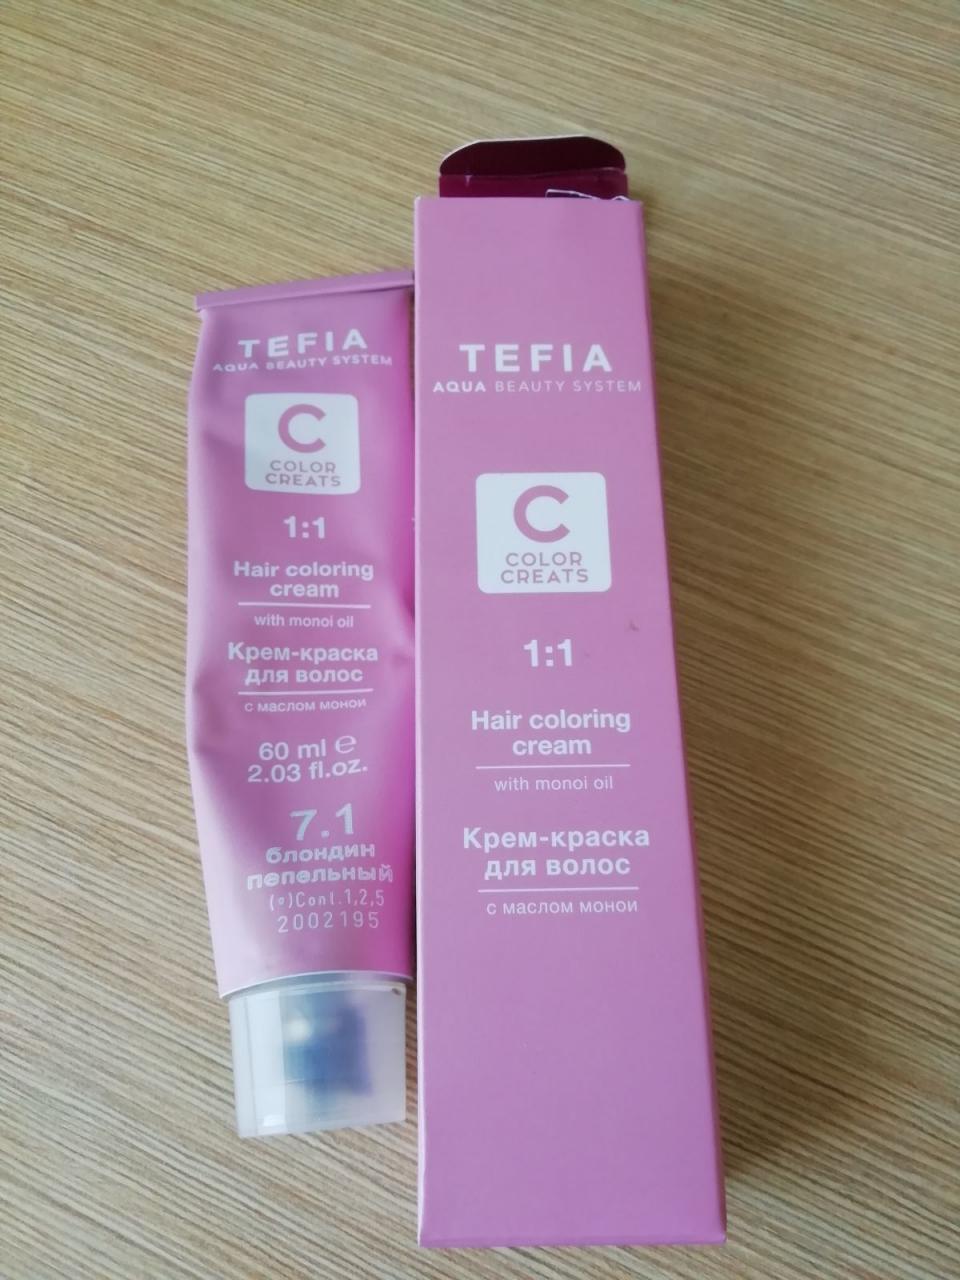 Отзыв на товар: Крем-краска для волос с маслом монои Color Creats. Tefia. Вид 1 от 30.08.2021 